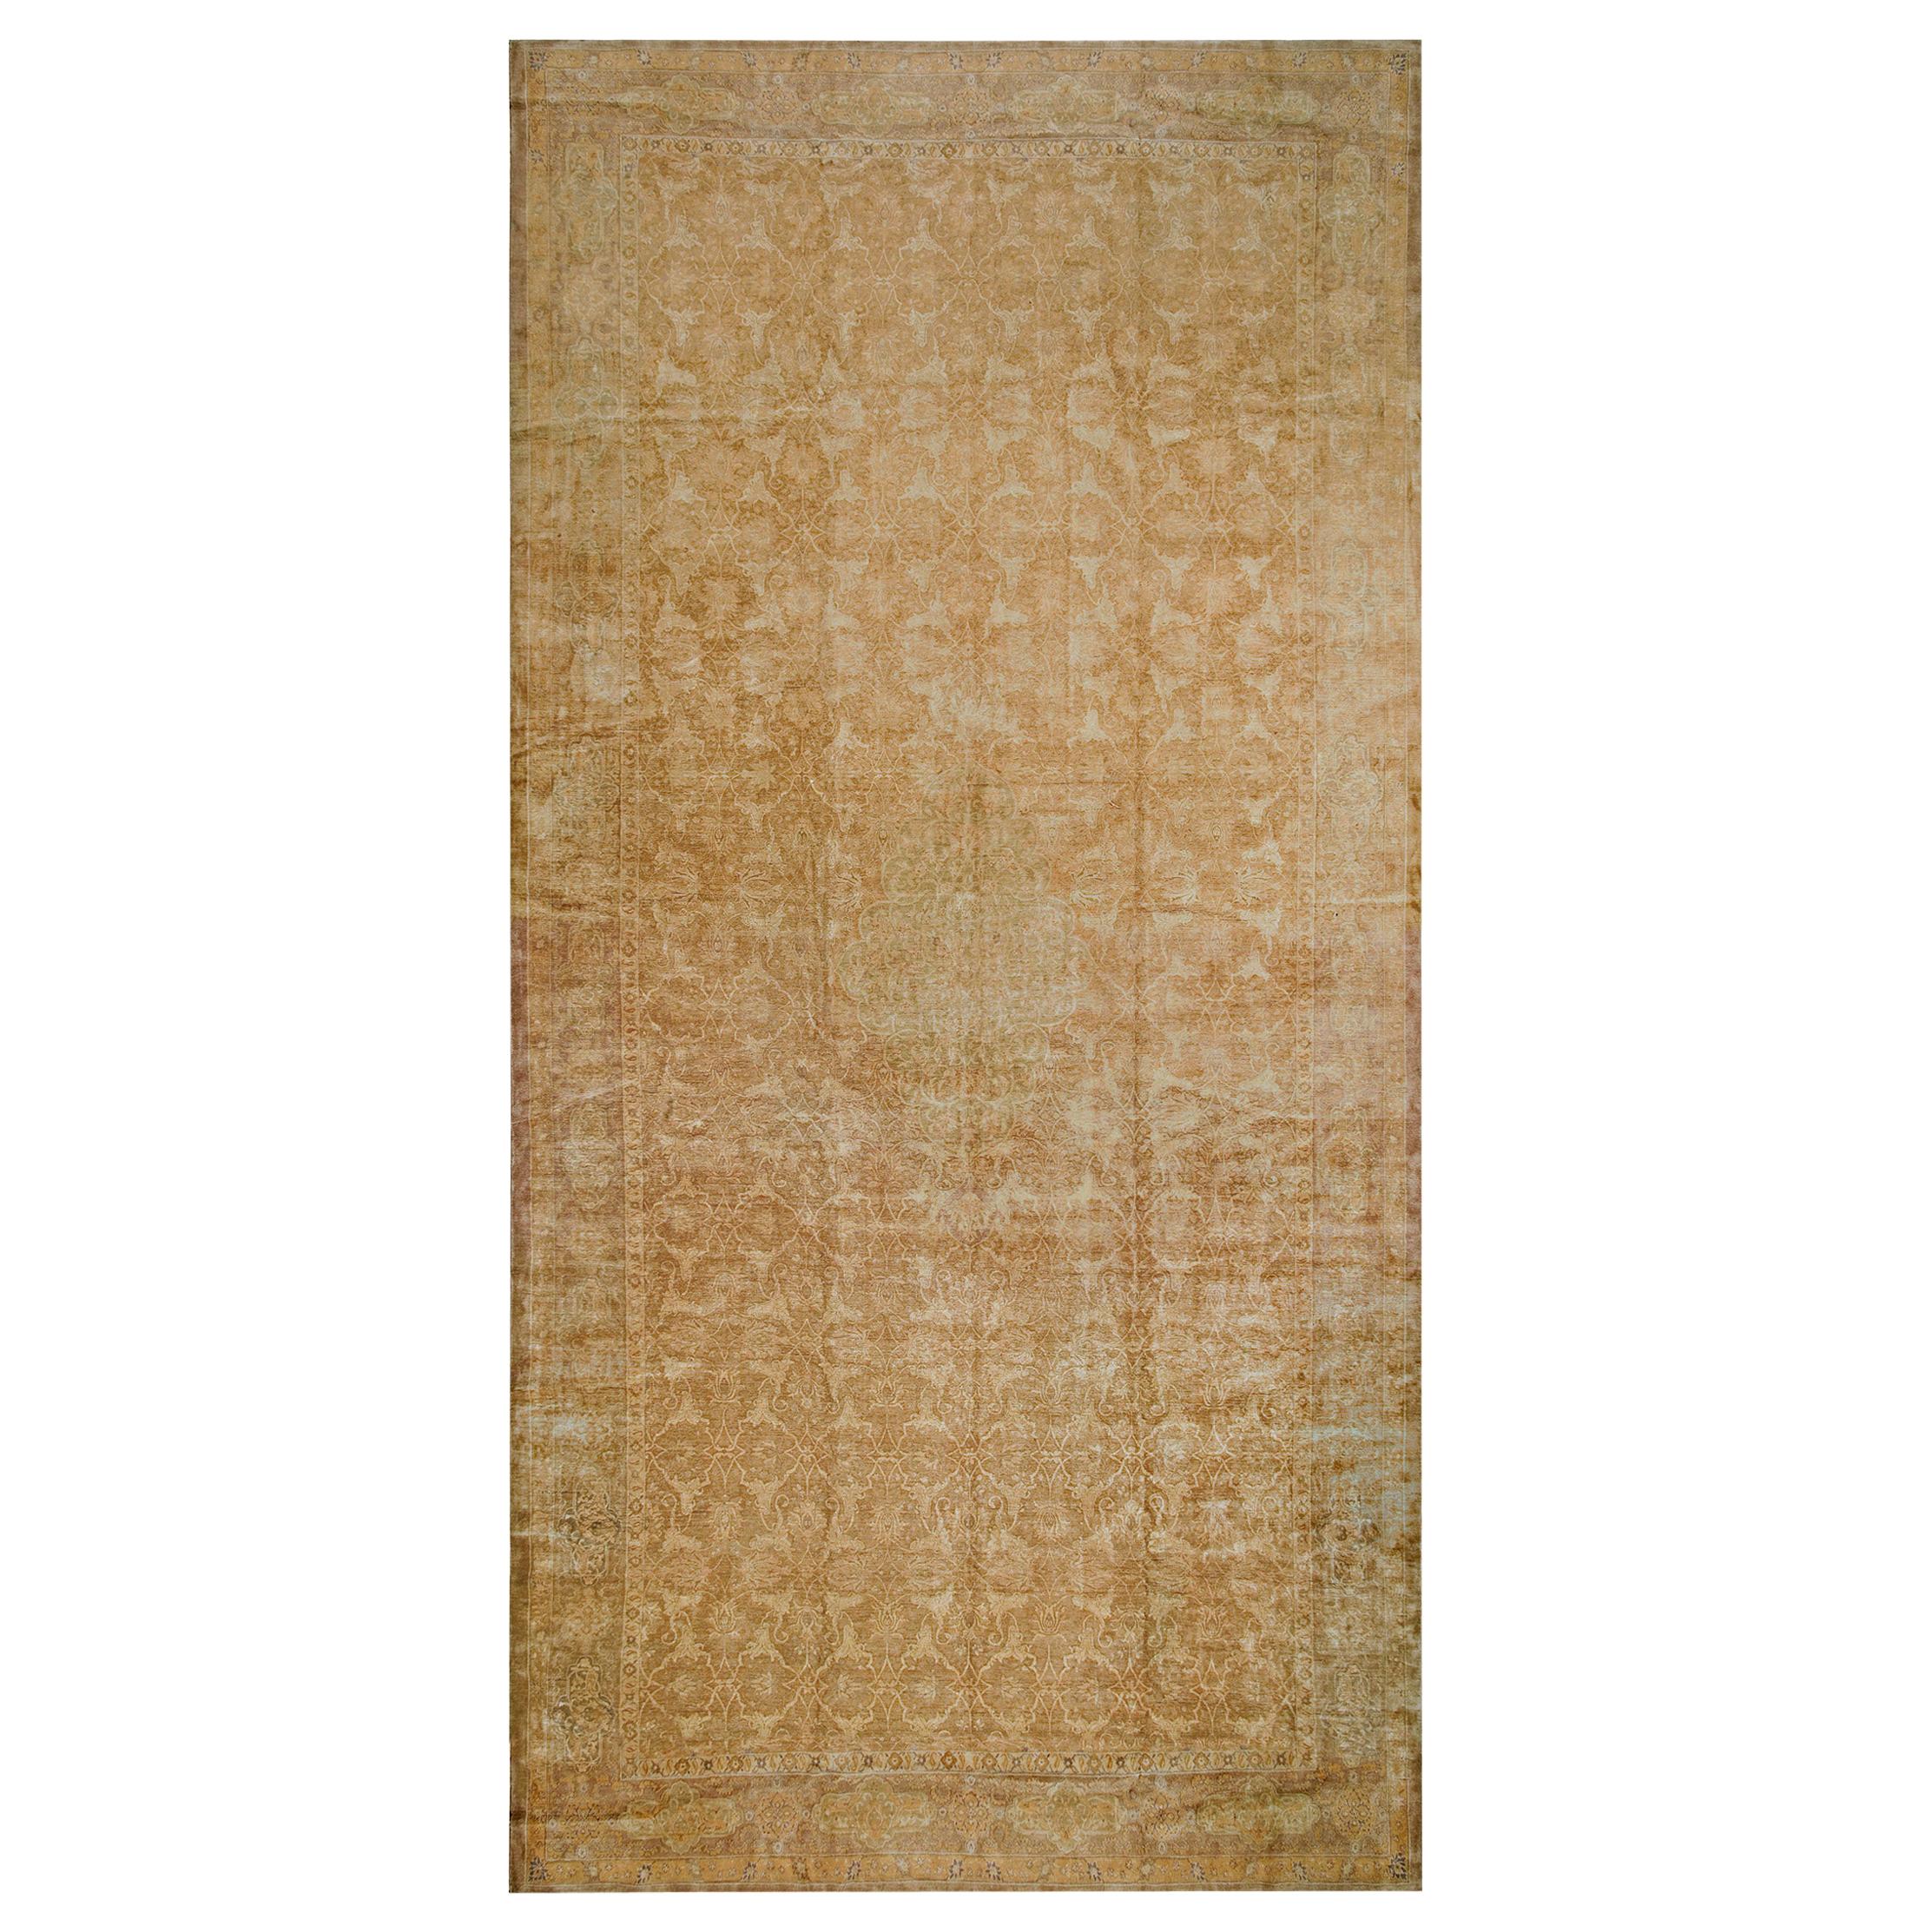 Early 20th Century Turkish Sivas Carpet ( 11' x 22'8" - 335 x 690 )  For Sale